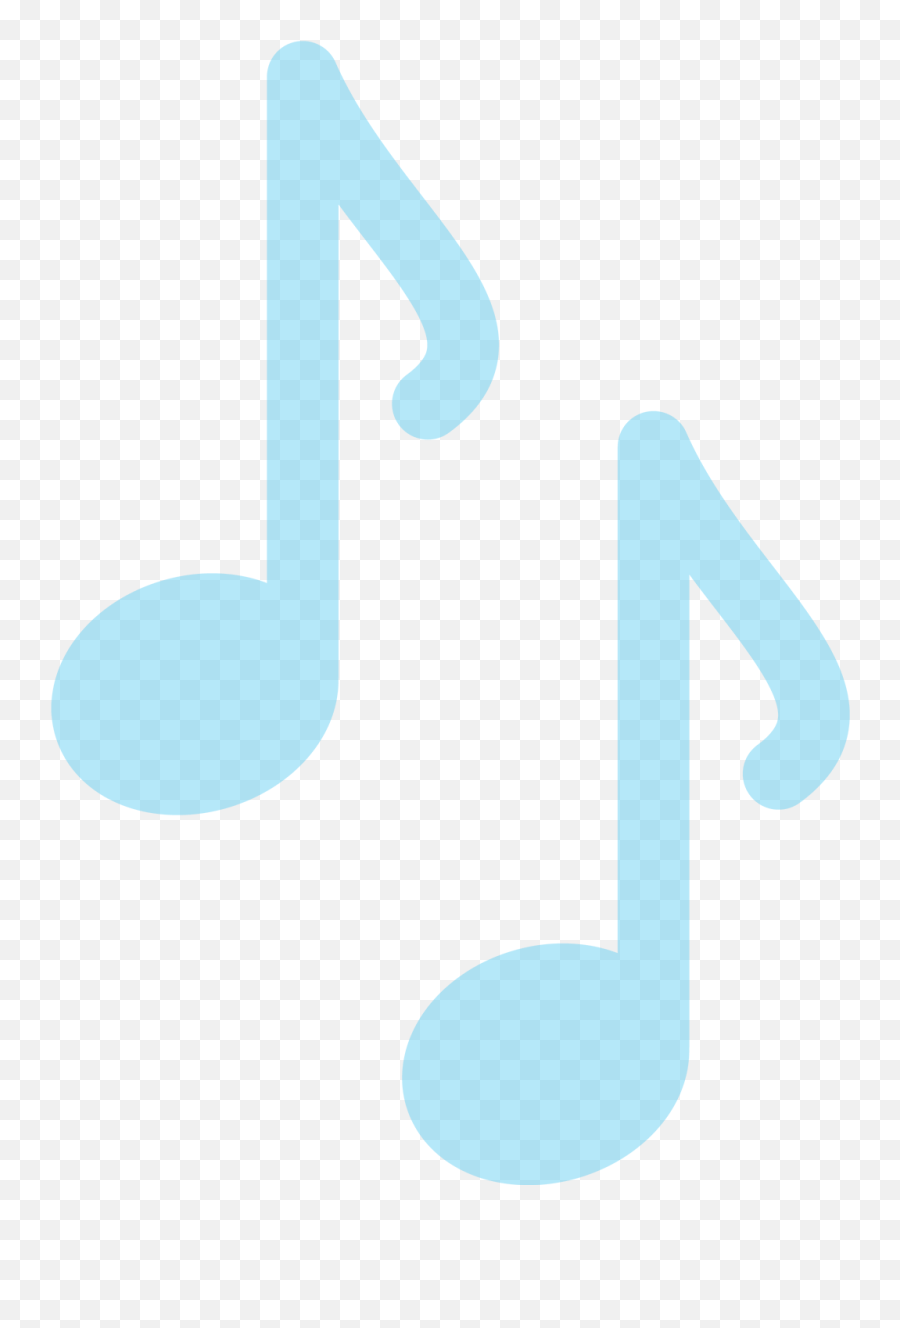 Purchase Tickets - Sheboygan Symphony Orchestra Musical Emoji,Ticket Emoji